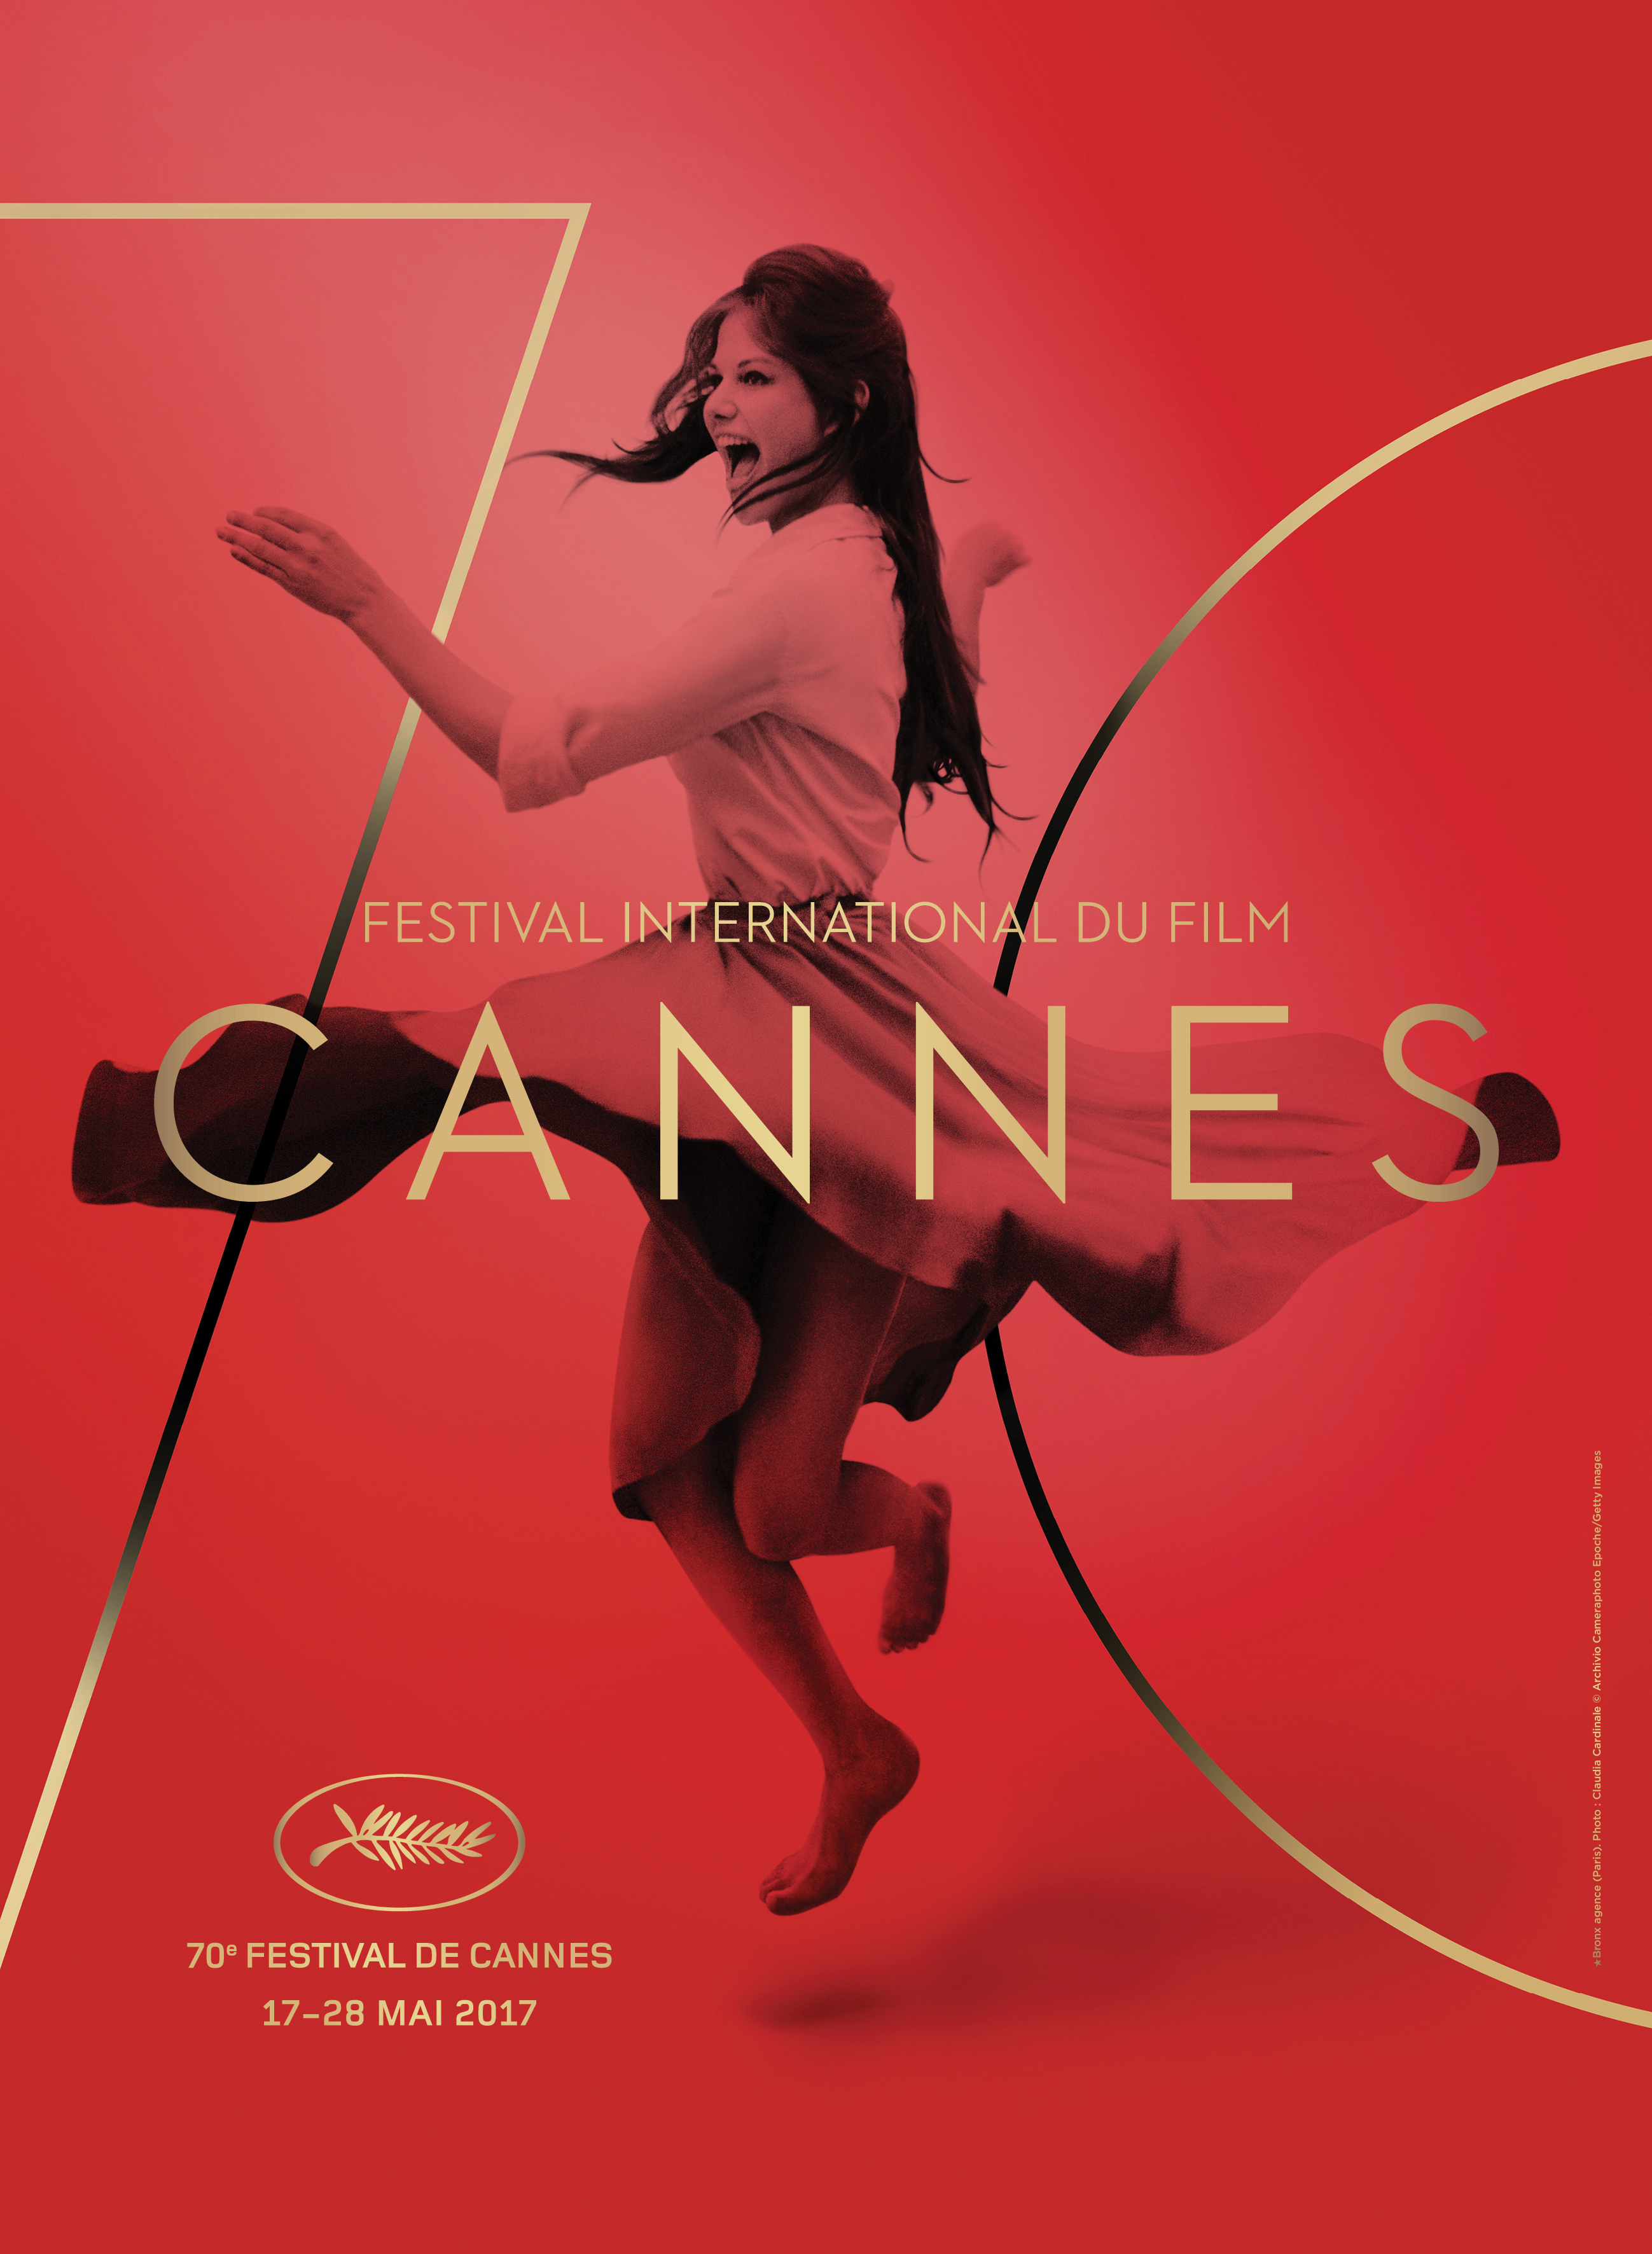 Cannes Film Festival (1952)